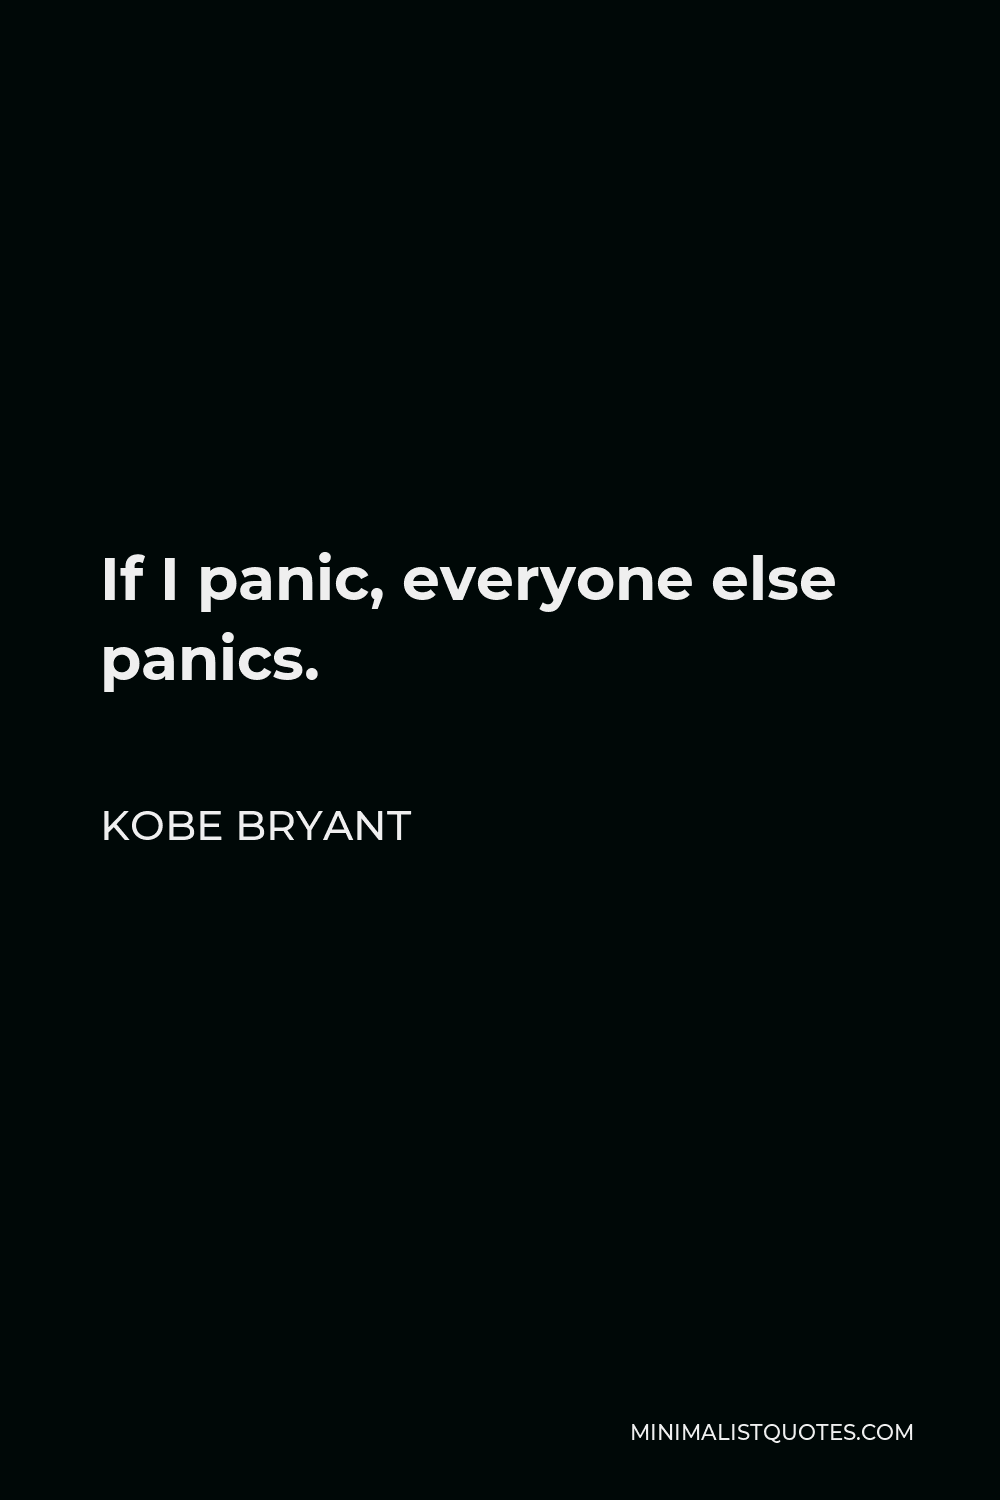 Kobe Bryant Quote - If I panic, everyone else panics.